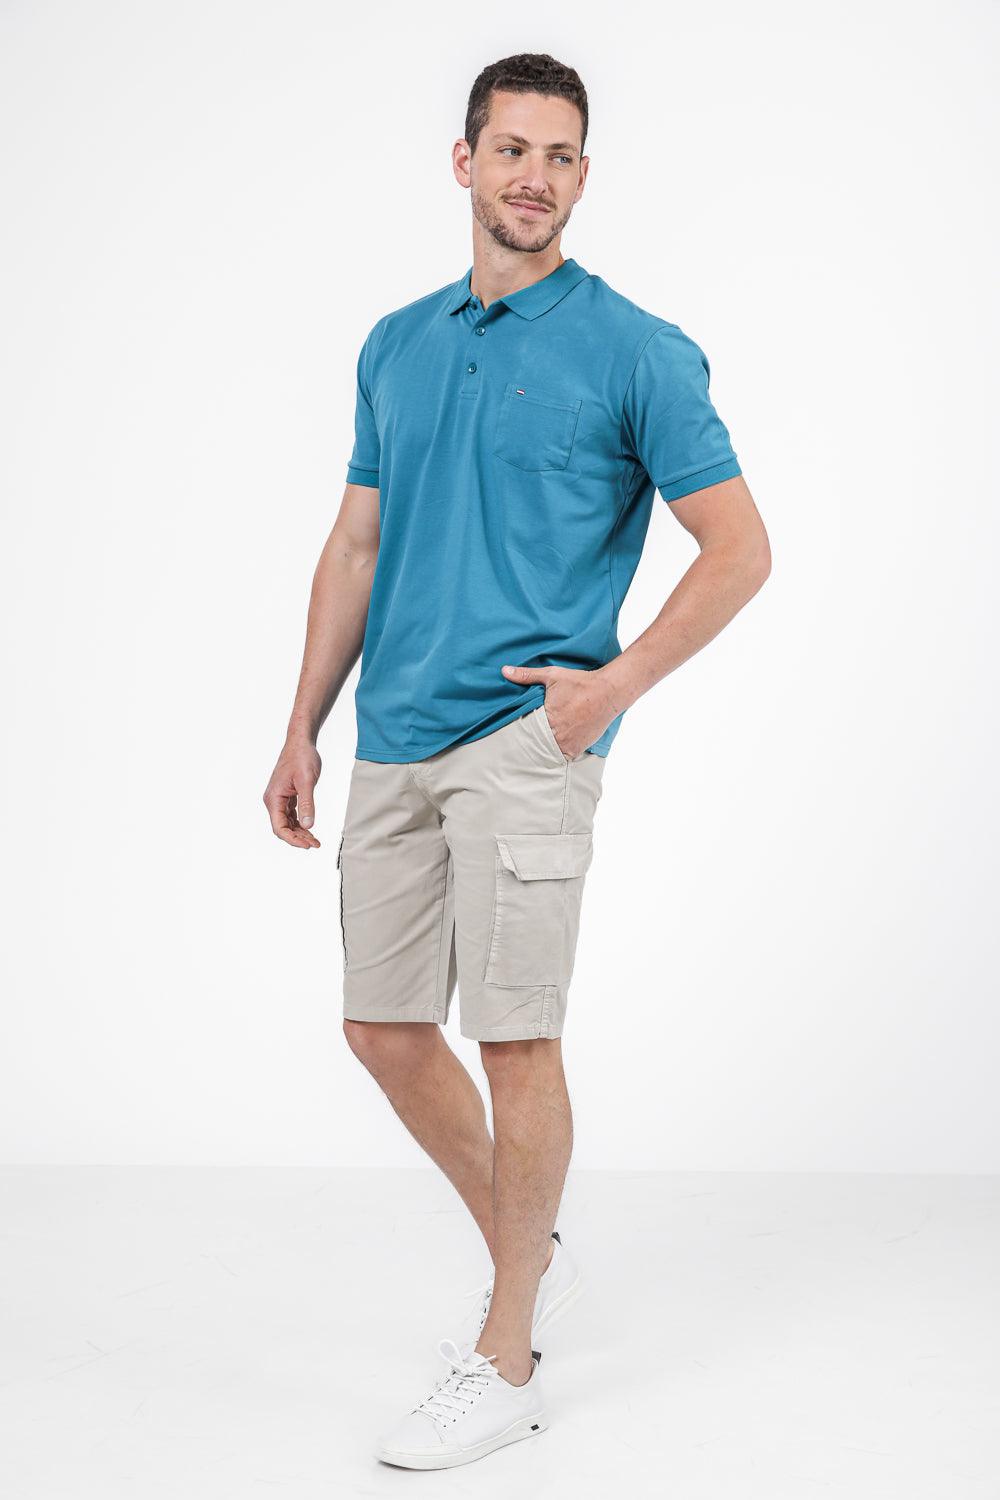 SCORCHER - מכנסי ברמודה CLASSIC בצבע בז' - MASHBIR//365